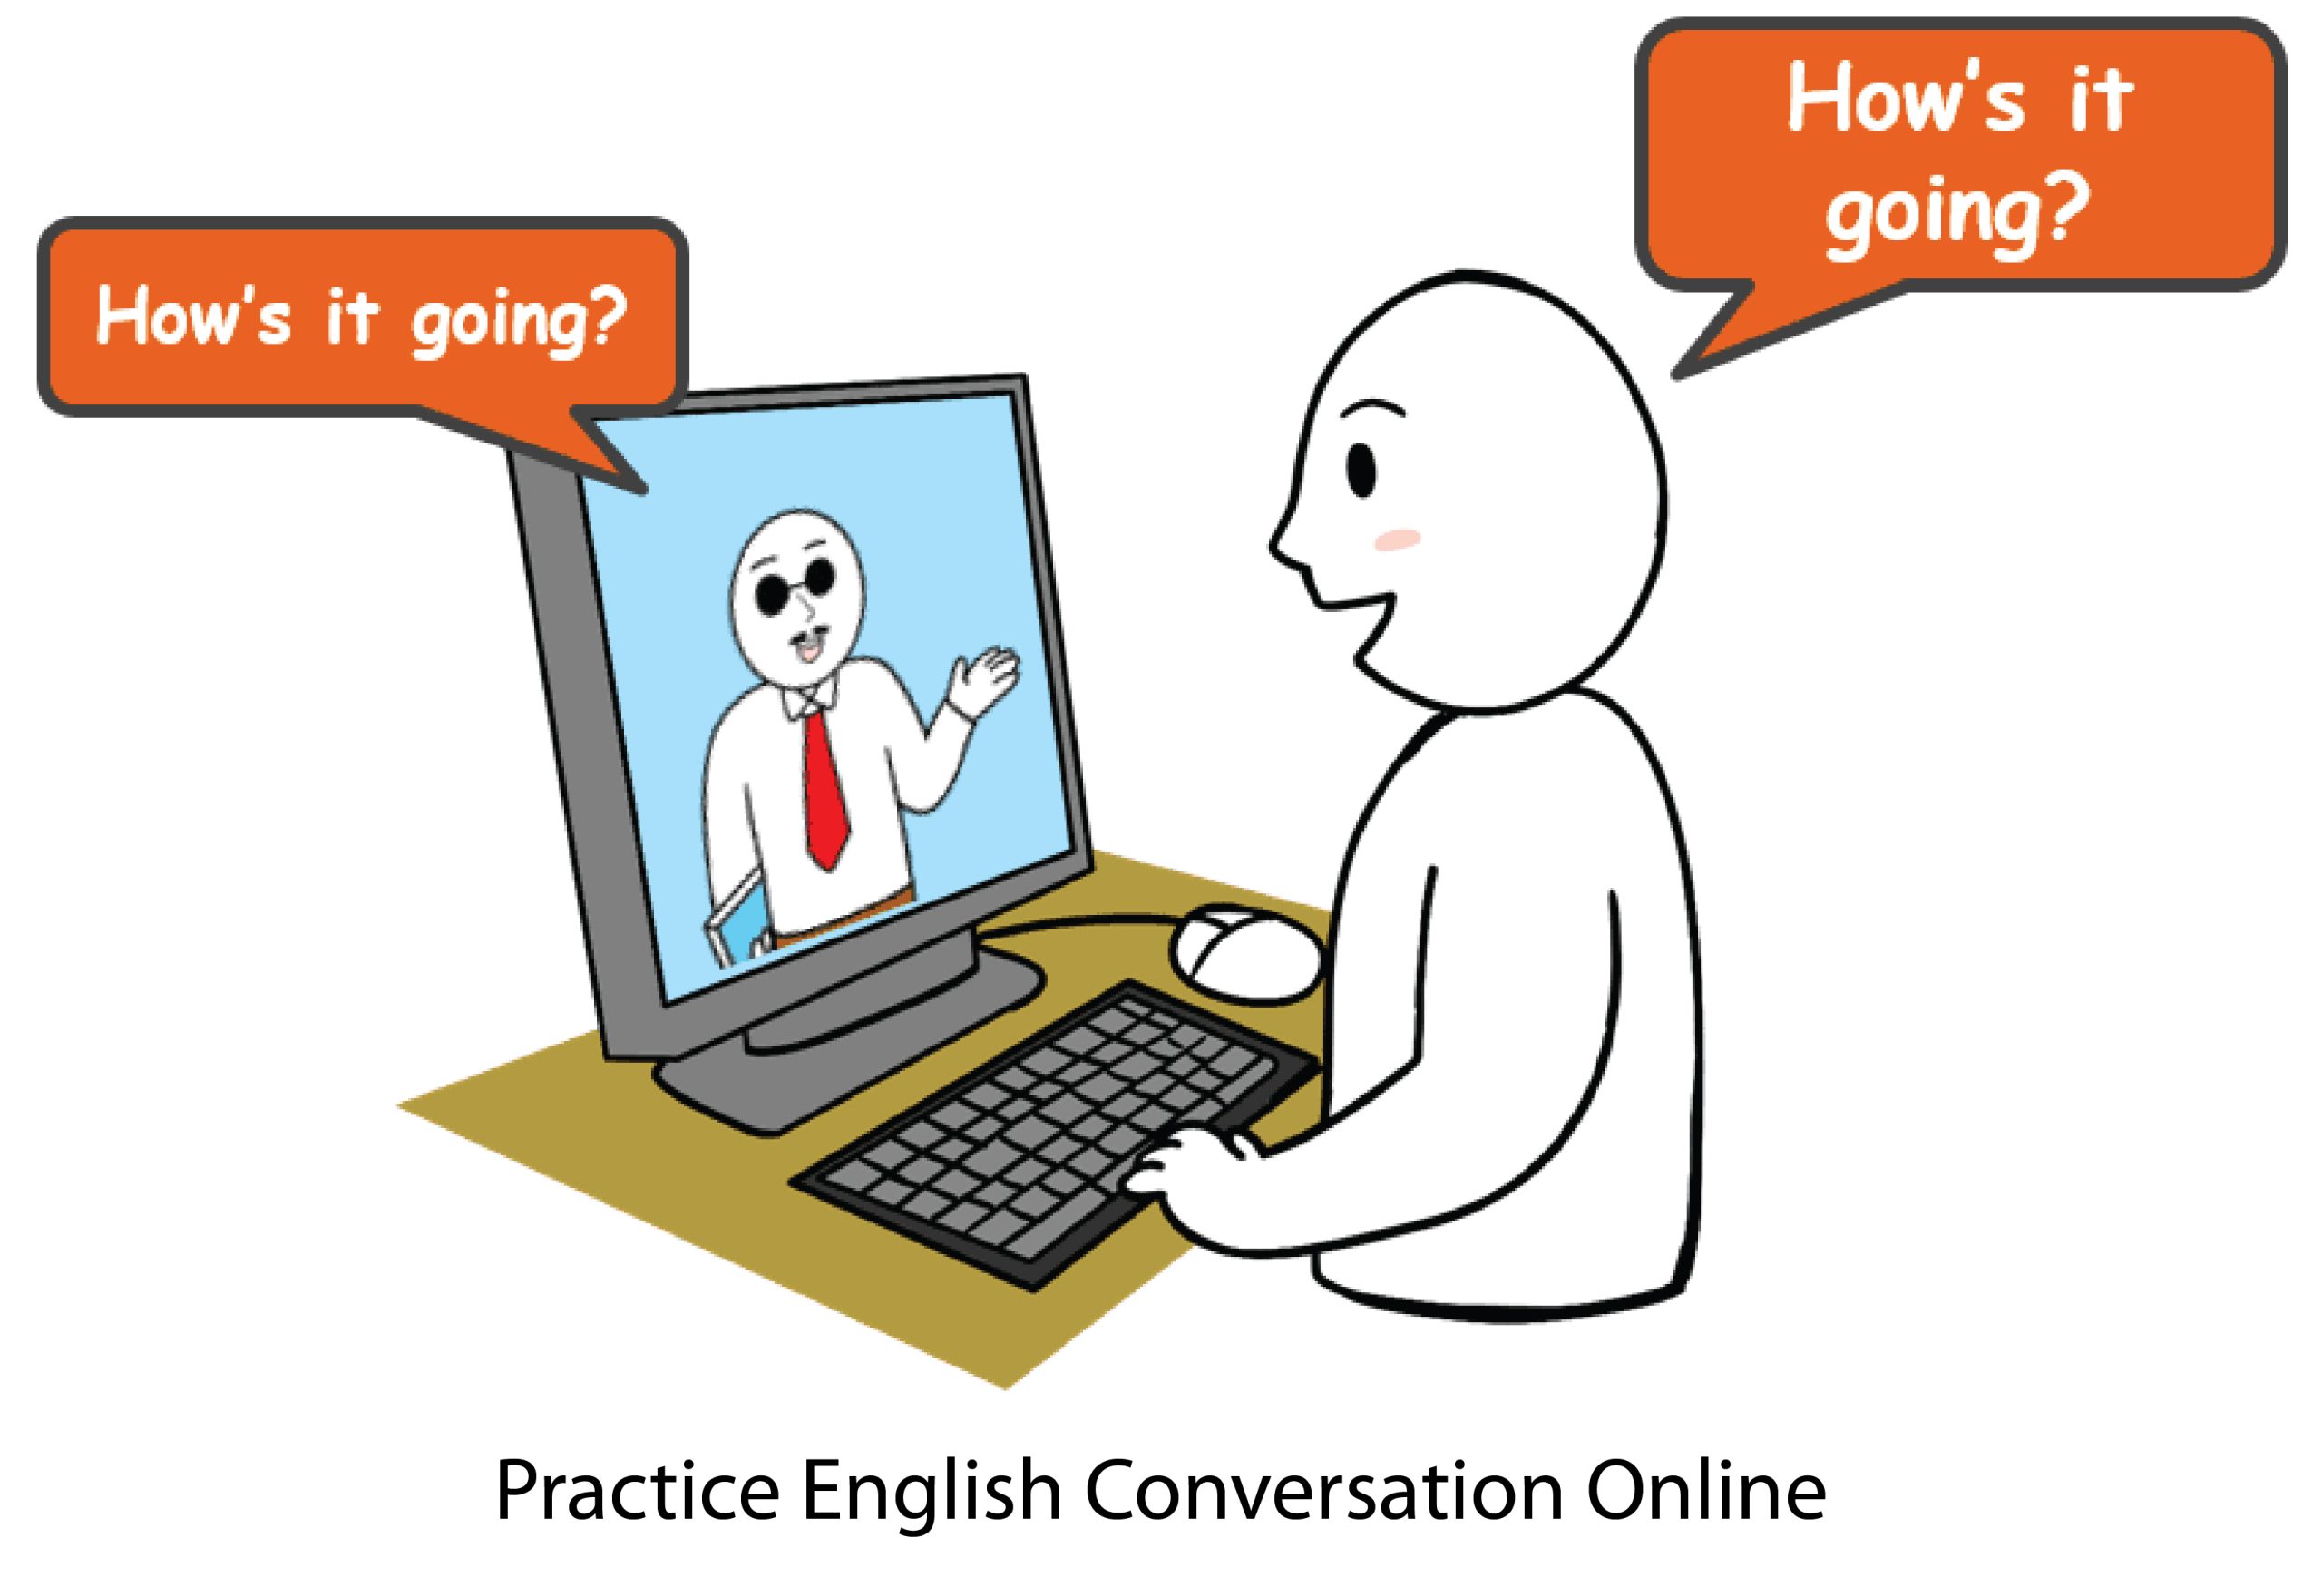 Practice English Conversation Online